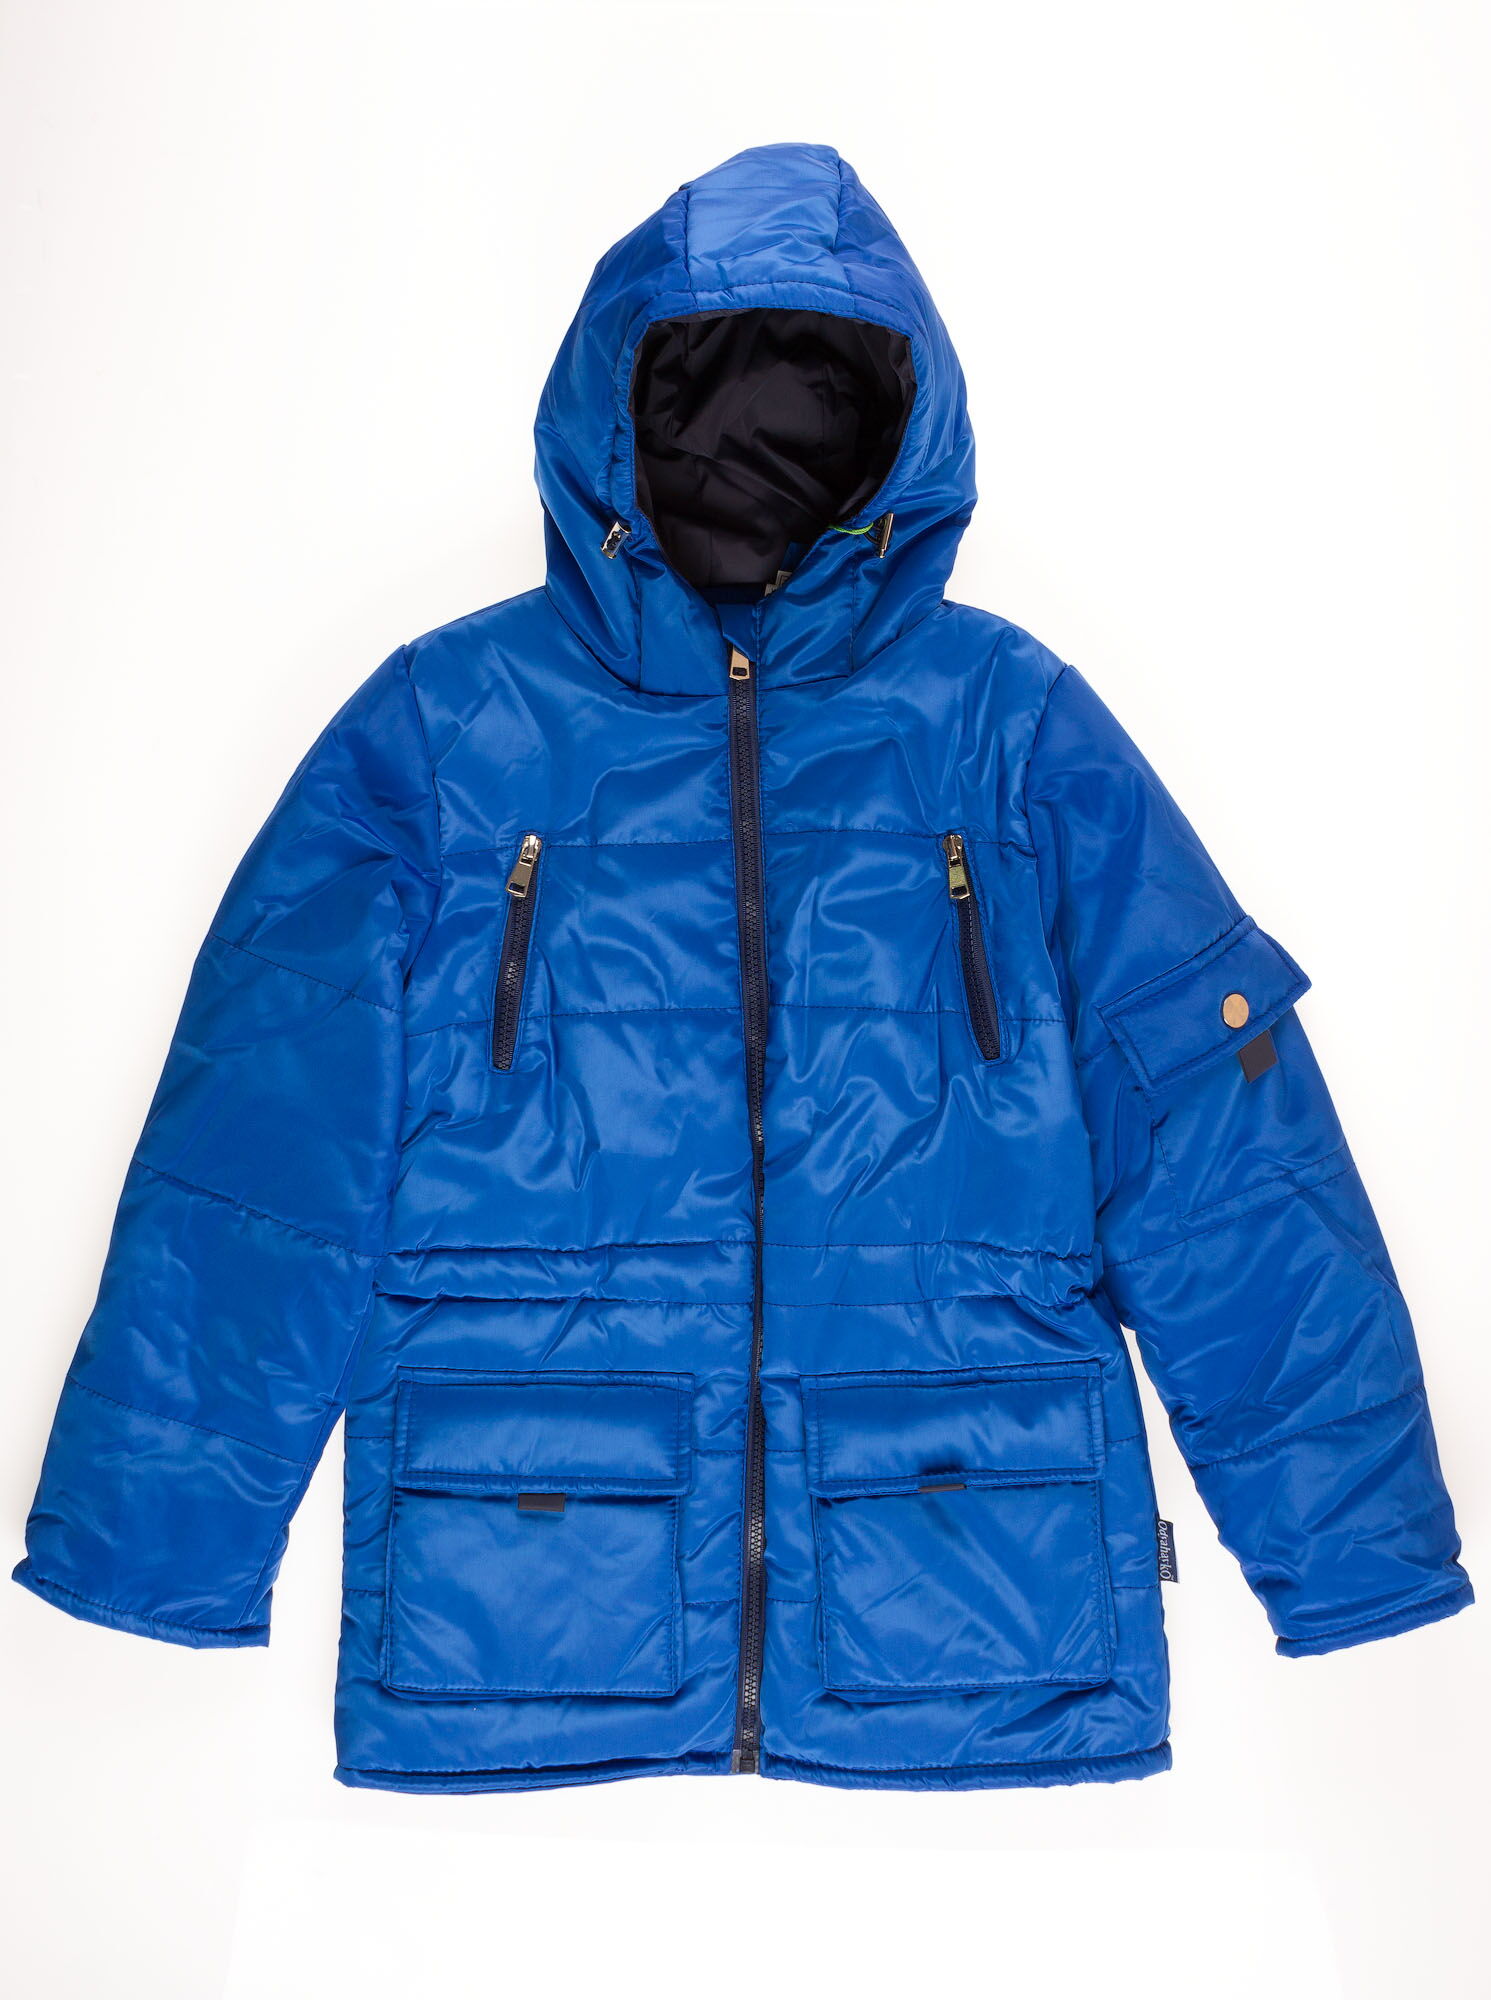 Куртка для мальчика ОДЯГАЙКО синяя 22114 - цена